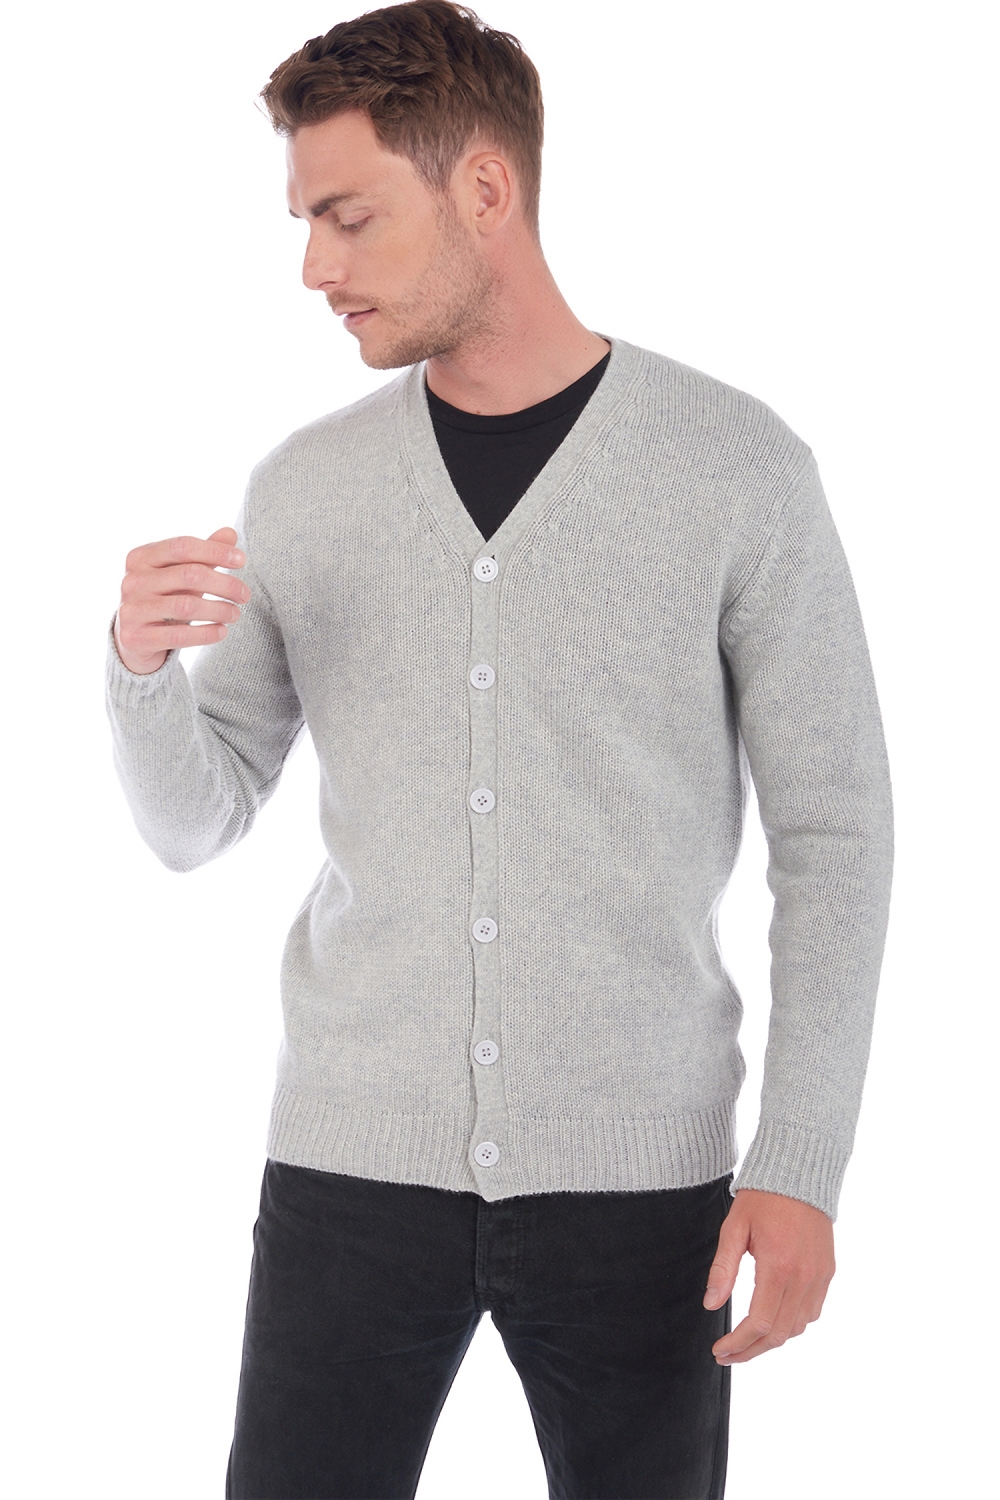 Cashmere men waistcoat sleeveless sweaters aden flanelle chine 3xl